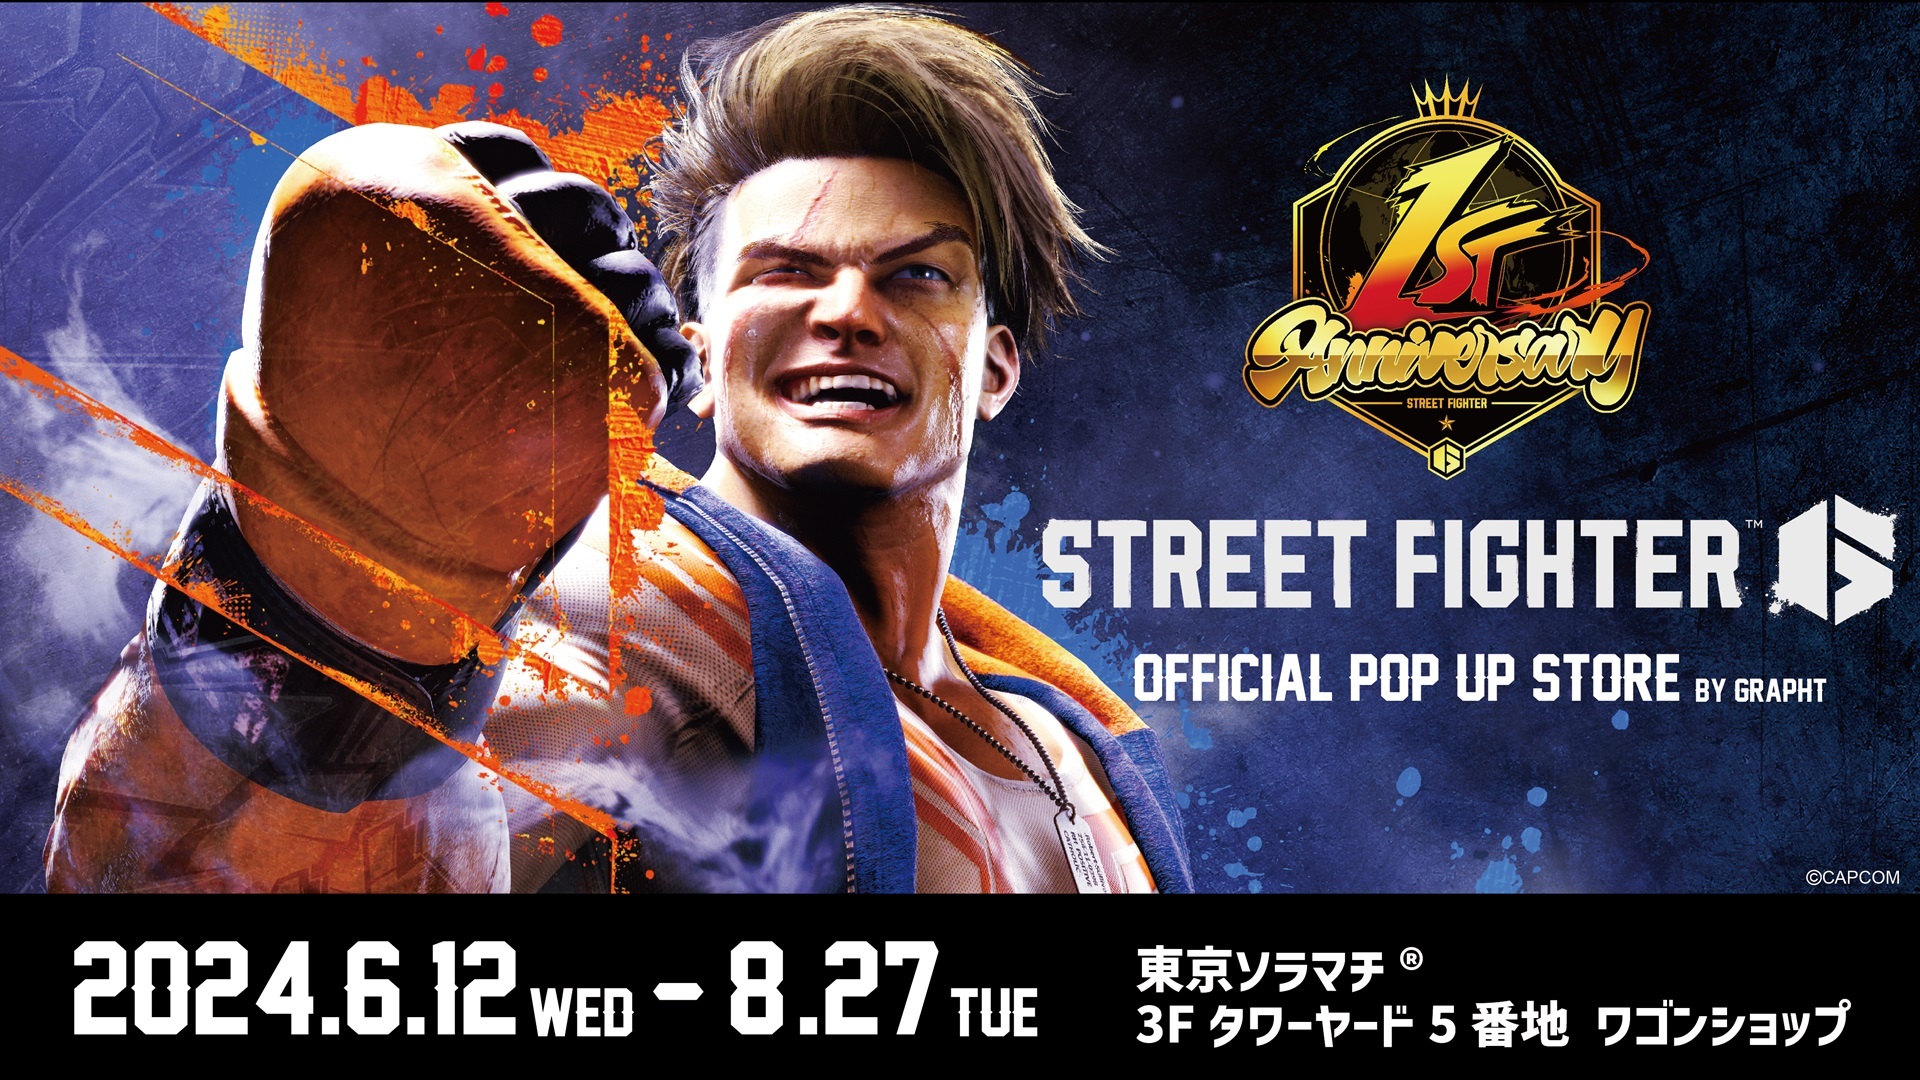 GRAPHT、『STREET FIGHTER 6』発売1周年を記念した
OFFICIAL POP UP STOREを開催　
東京ソラマチ(R)にて6月12日(水)よりスタート